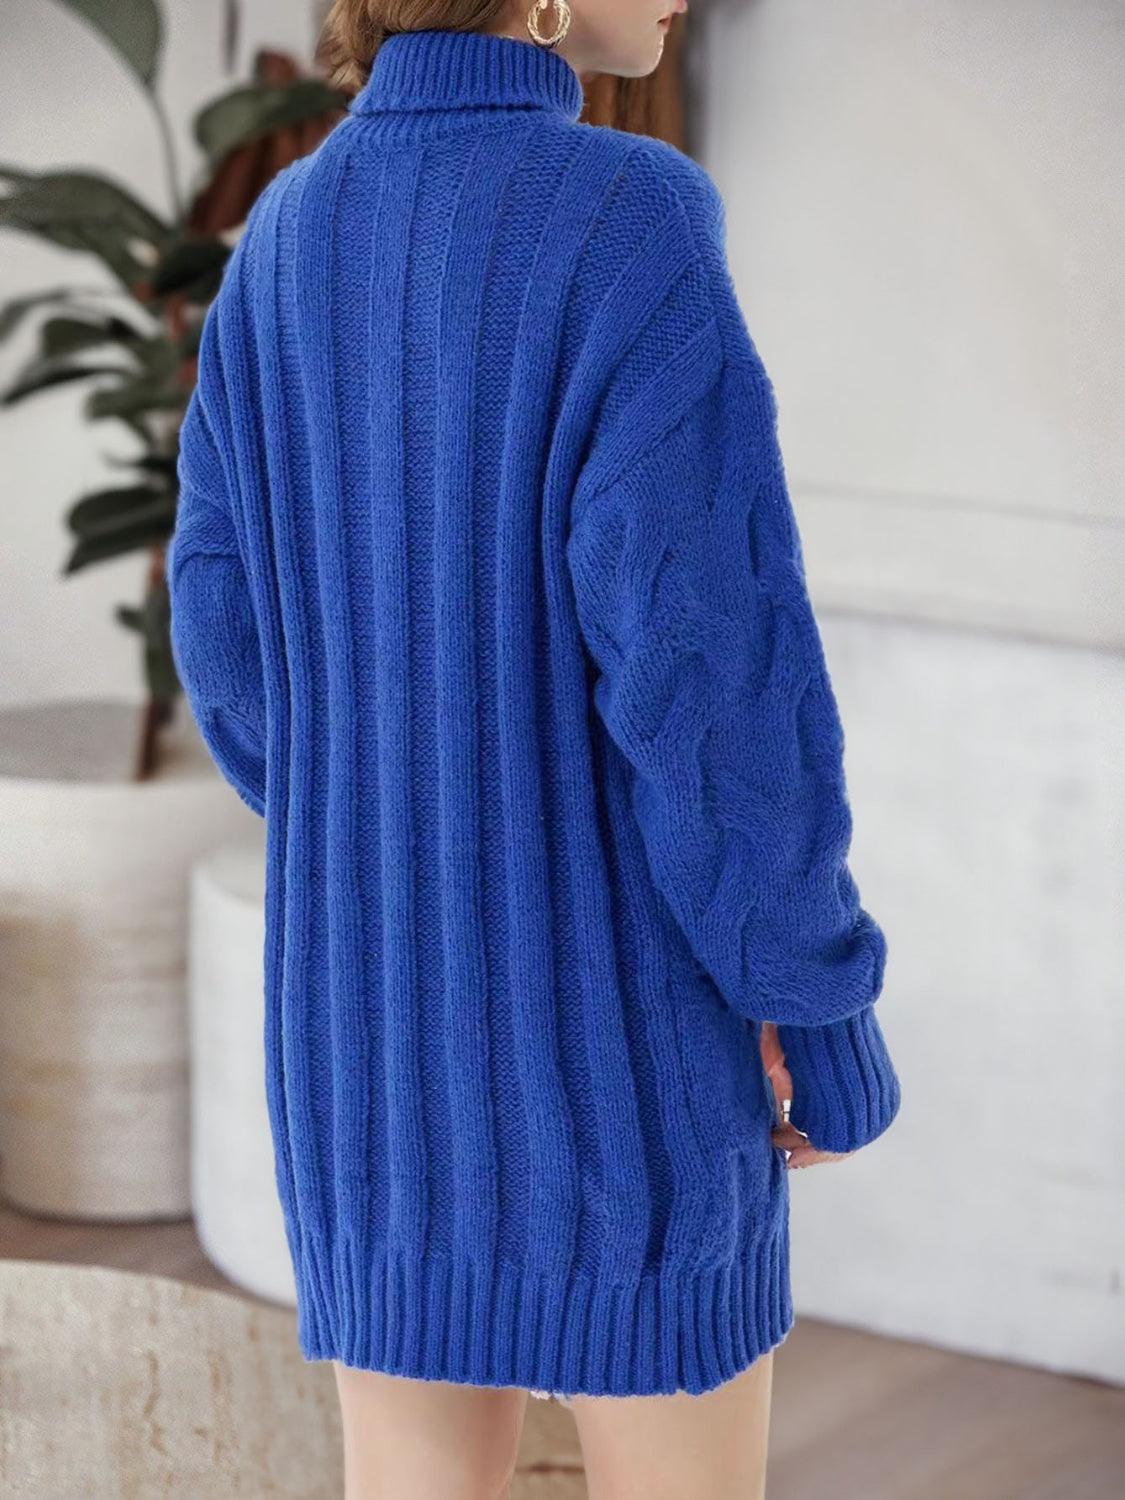 Turtleneck Sweater Dress - Lab Fashion, Home & Health